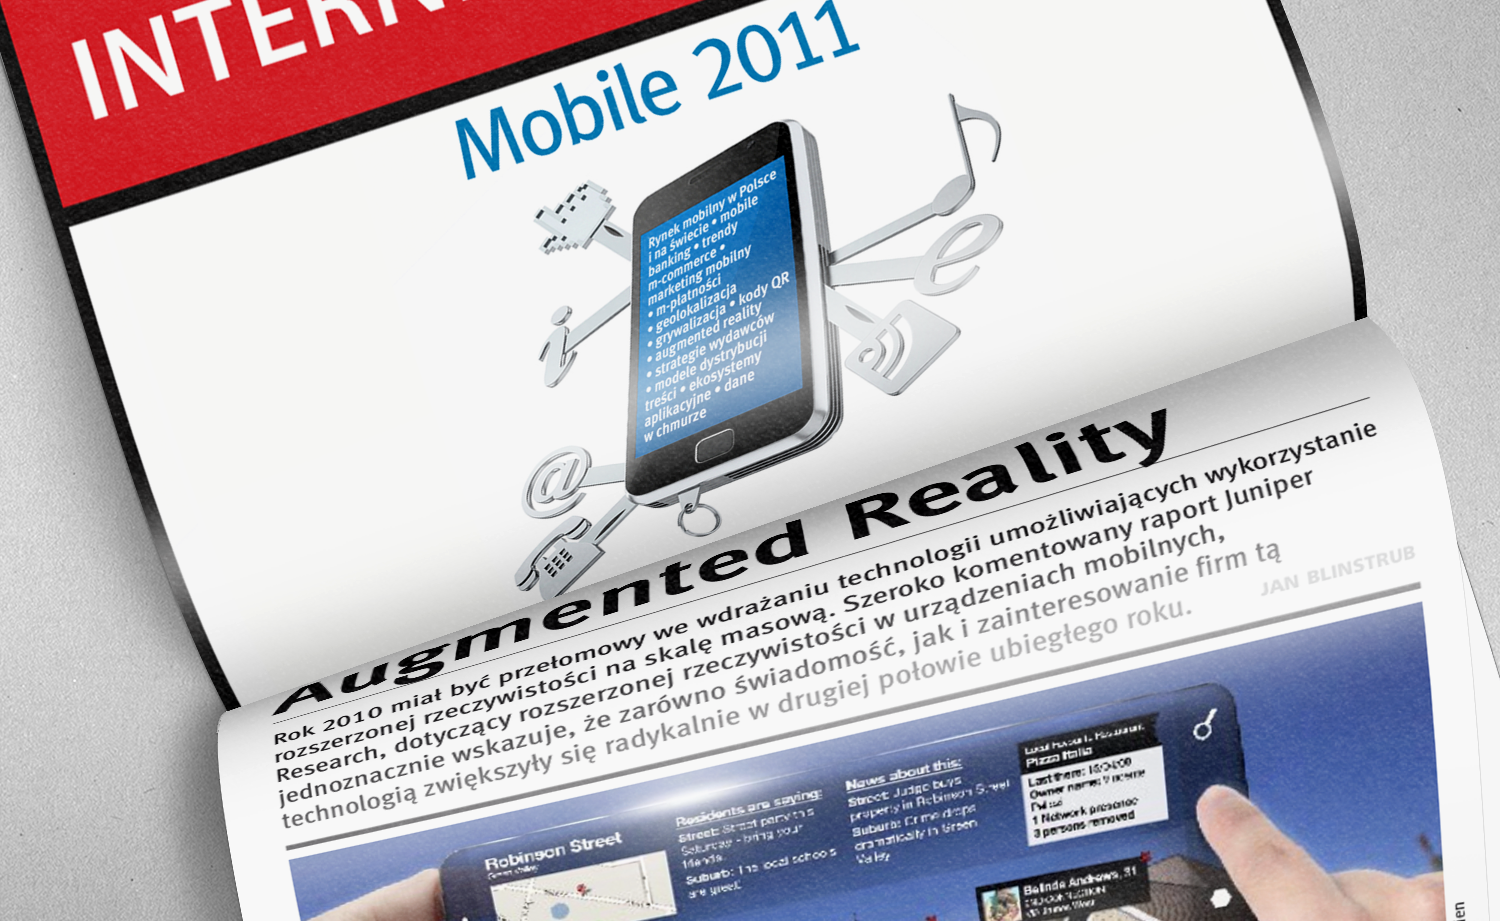 Internet Standard report – mobile 2011